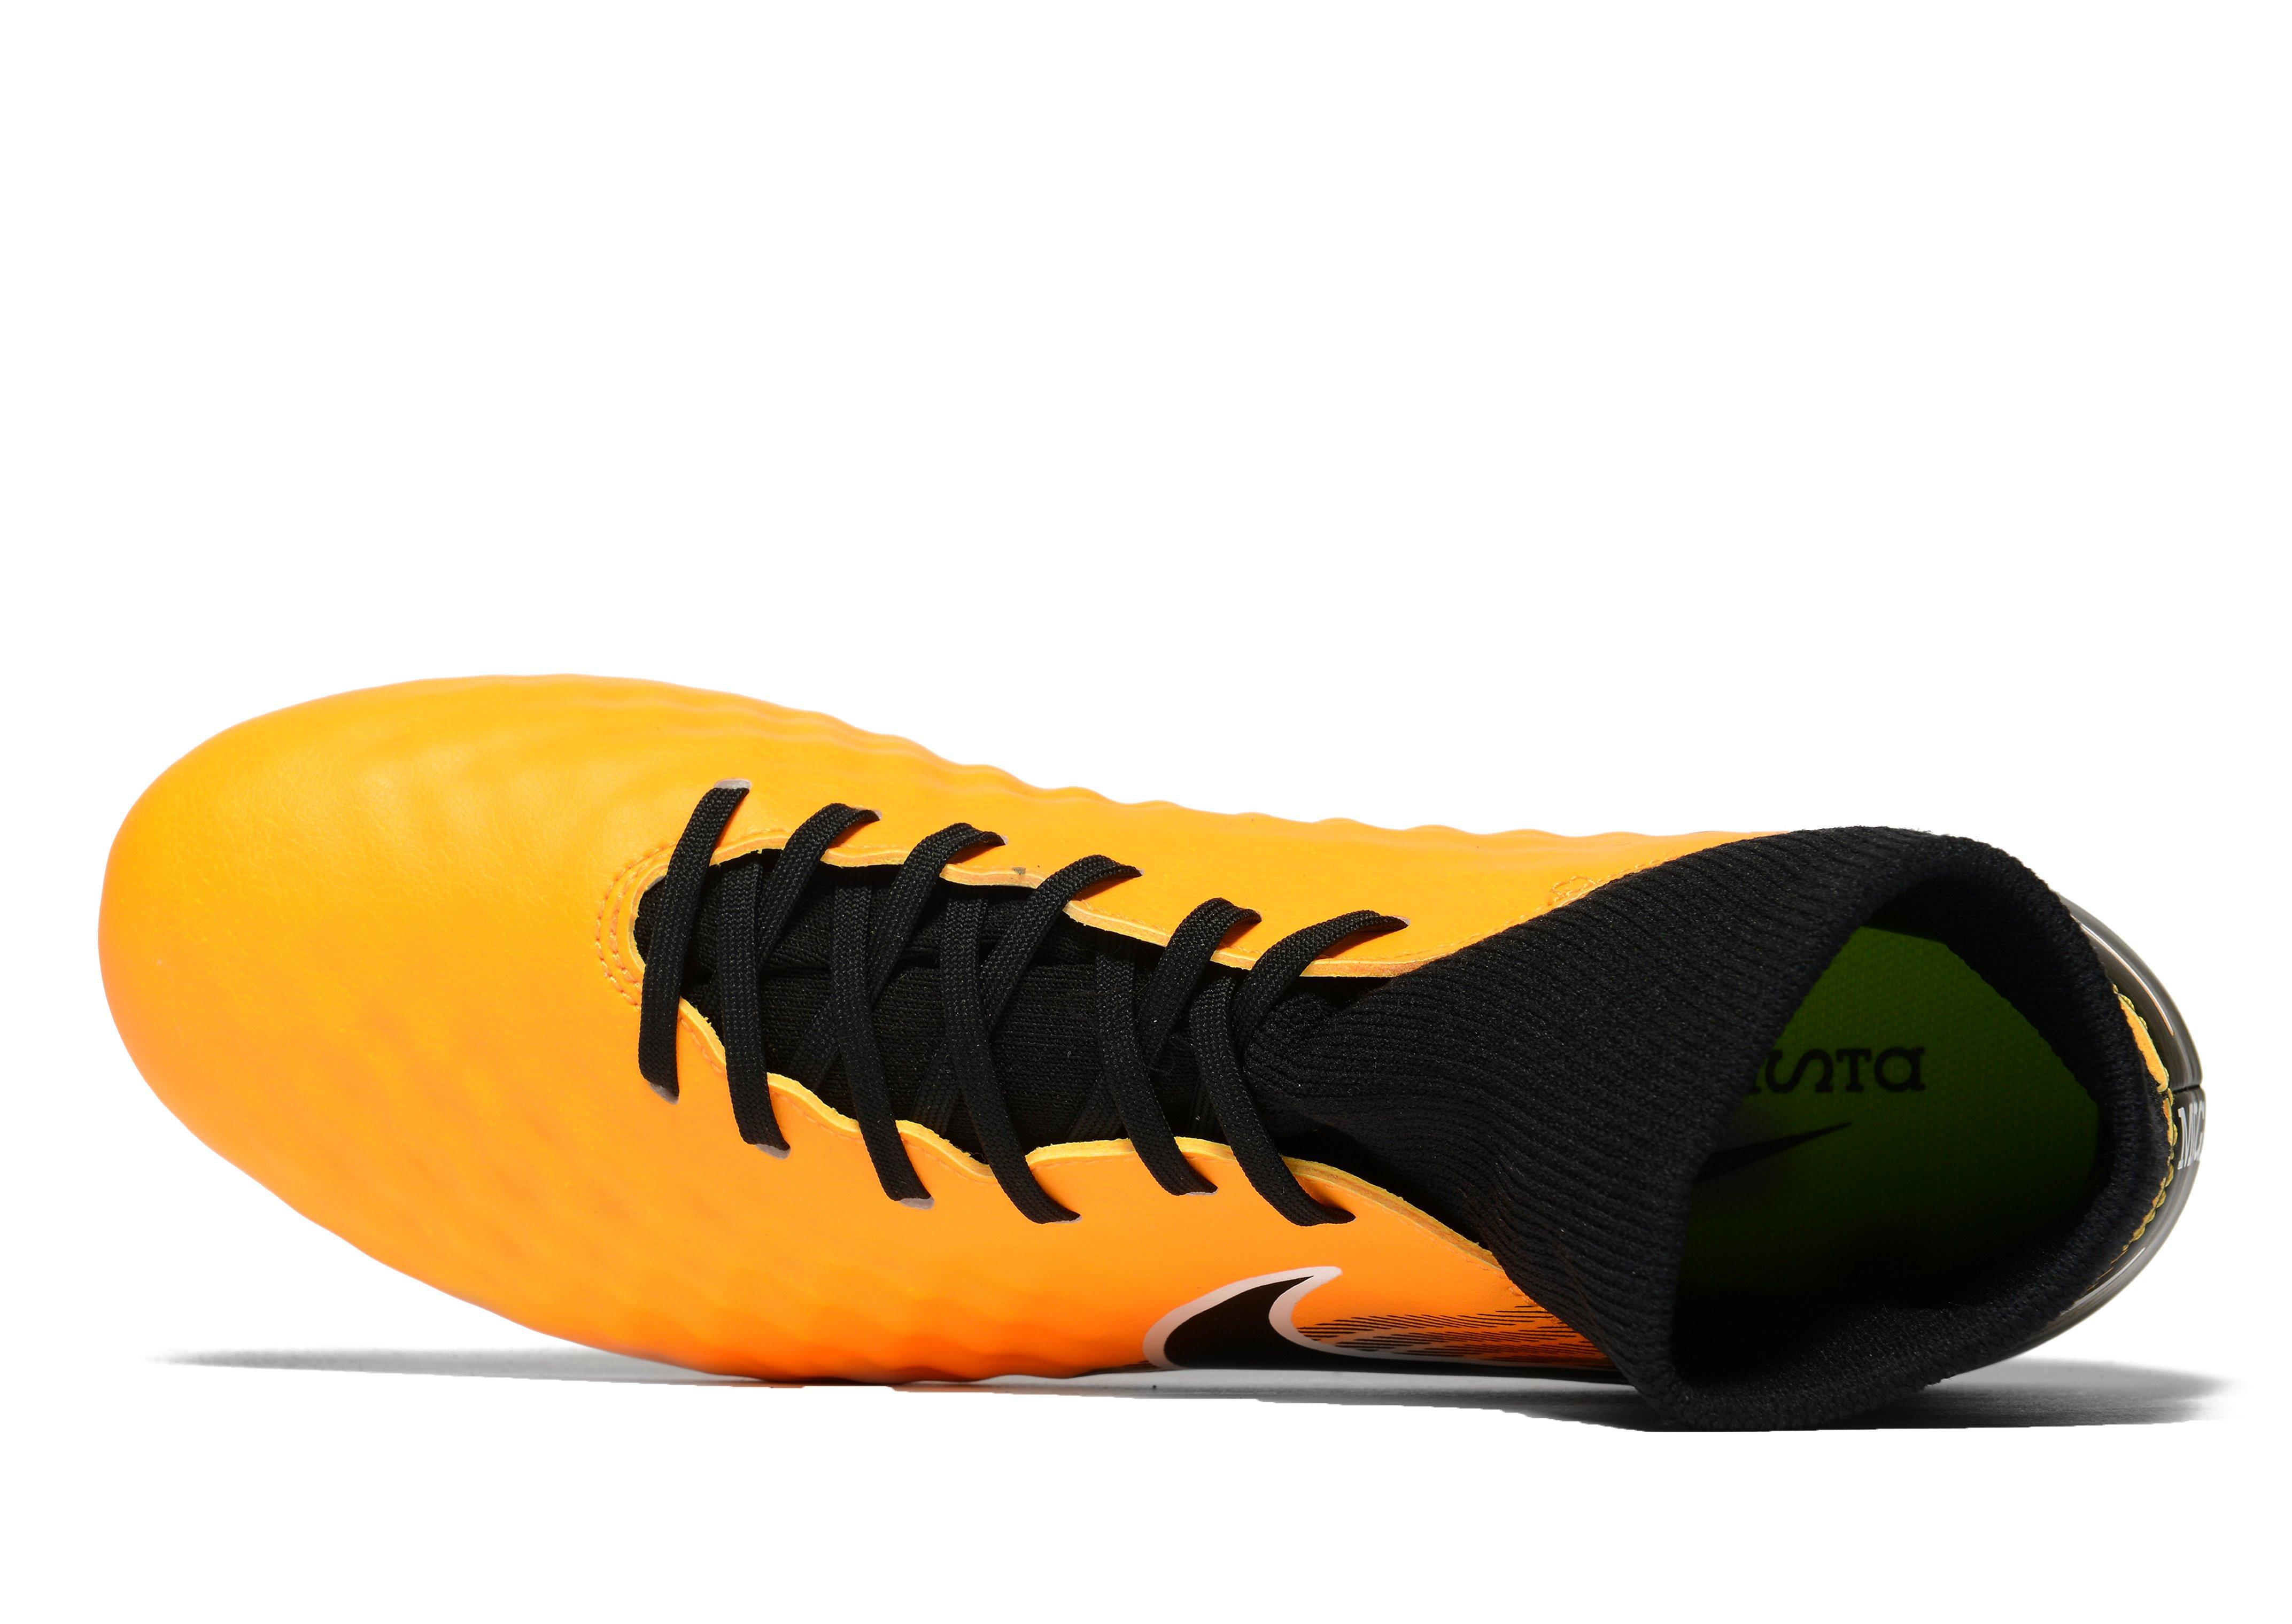 Stunning Nike MagistaX Finale II Dark Lightning Boots Leaked